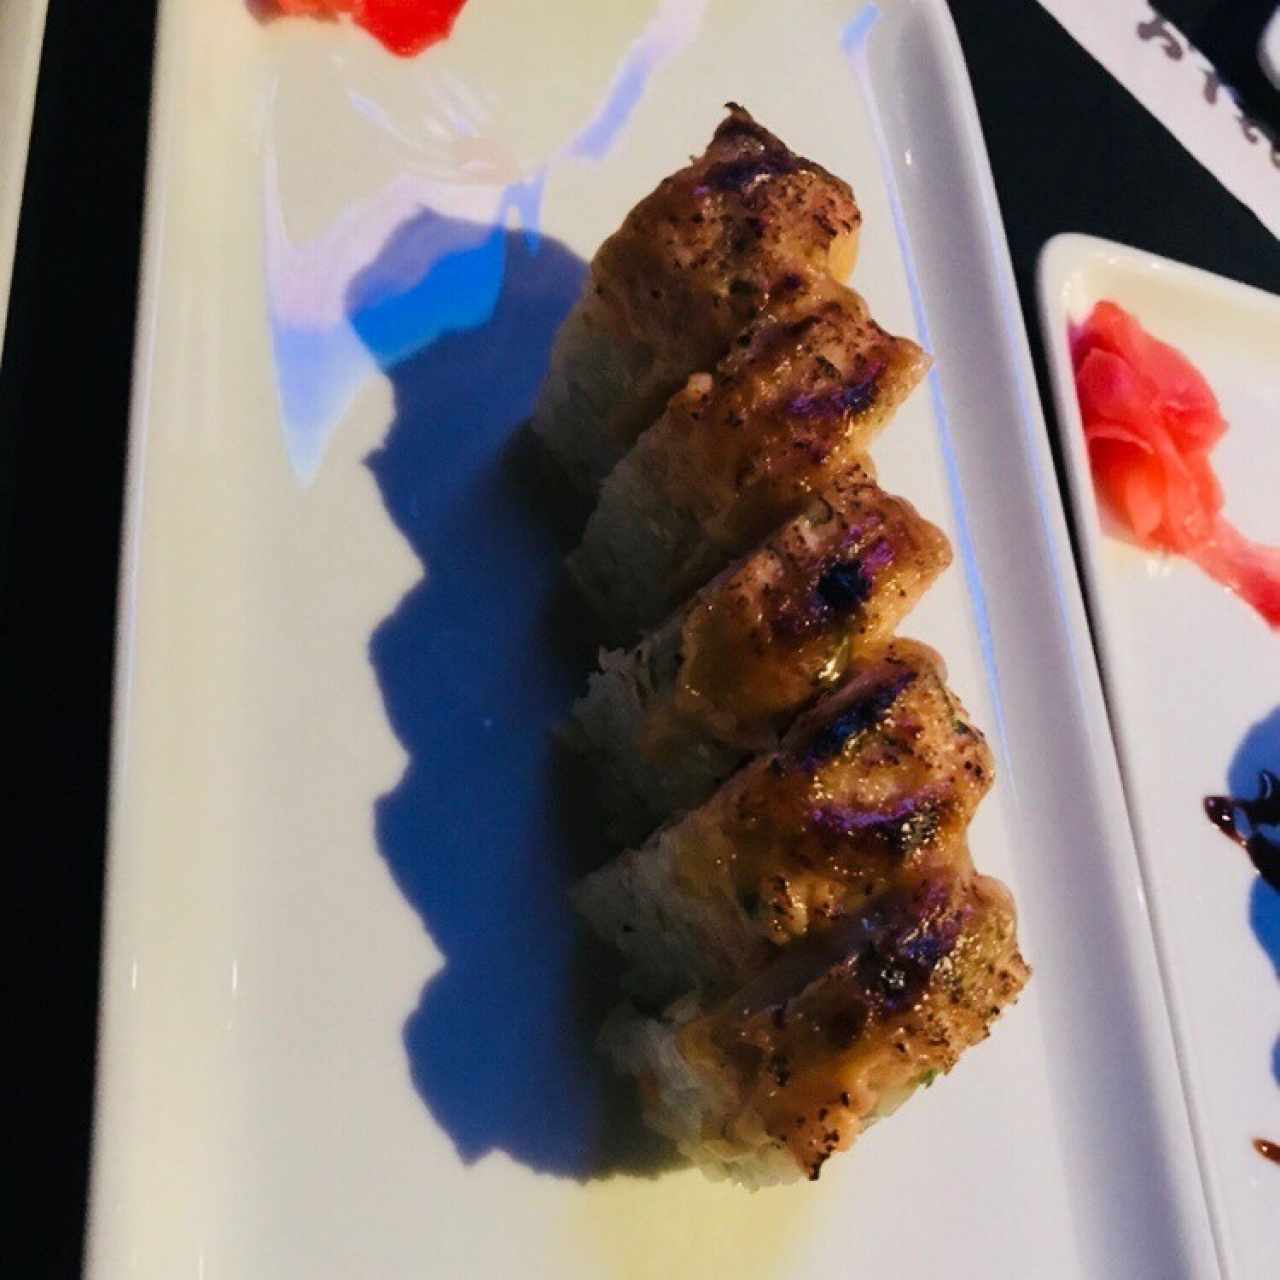 Sushi rolls/Makis - Okinawa roll